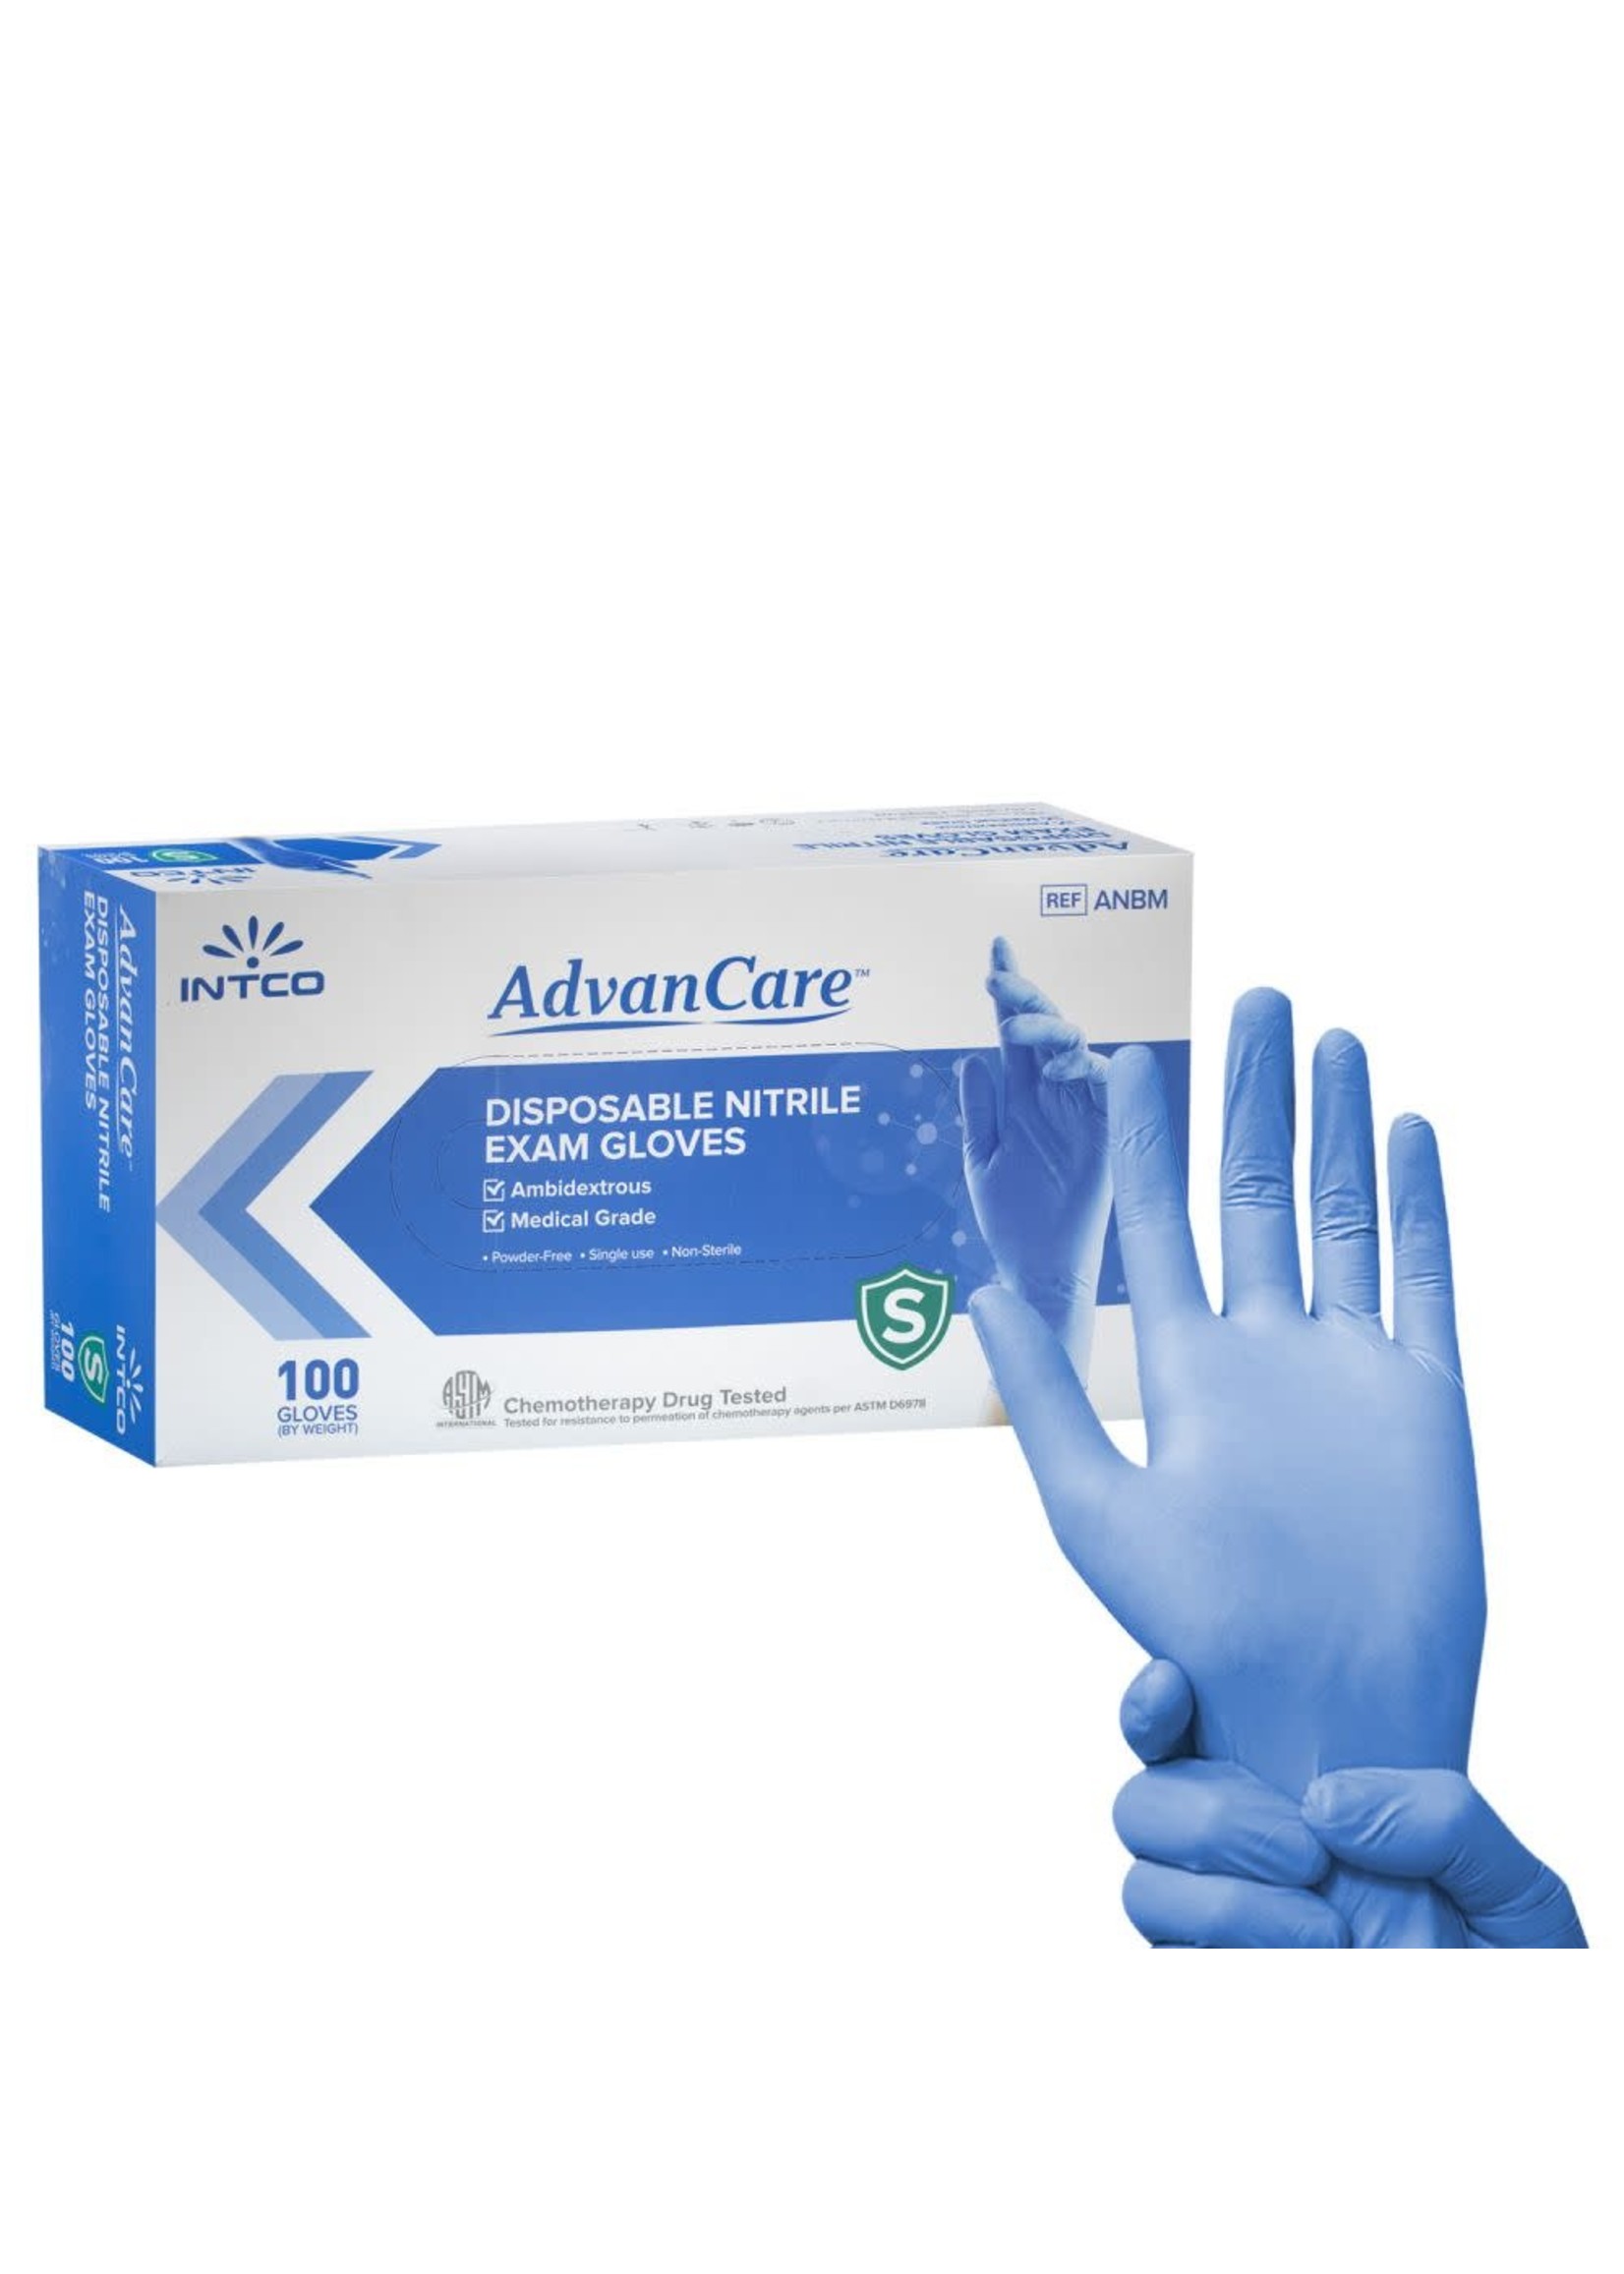 AdvanCare Disposable Nitrile Gloves (100/cs)